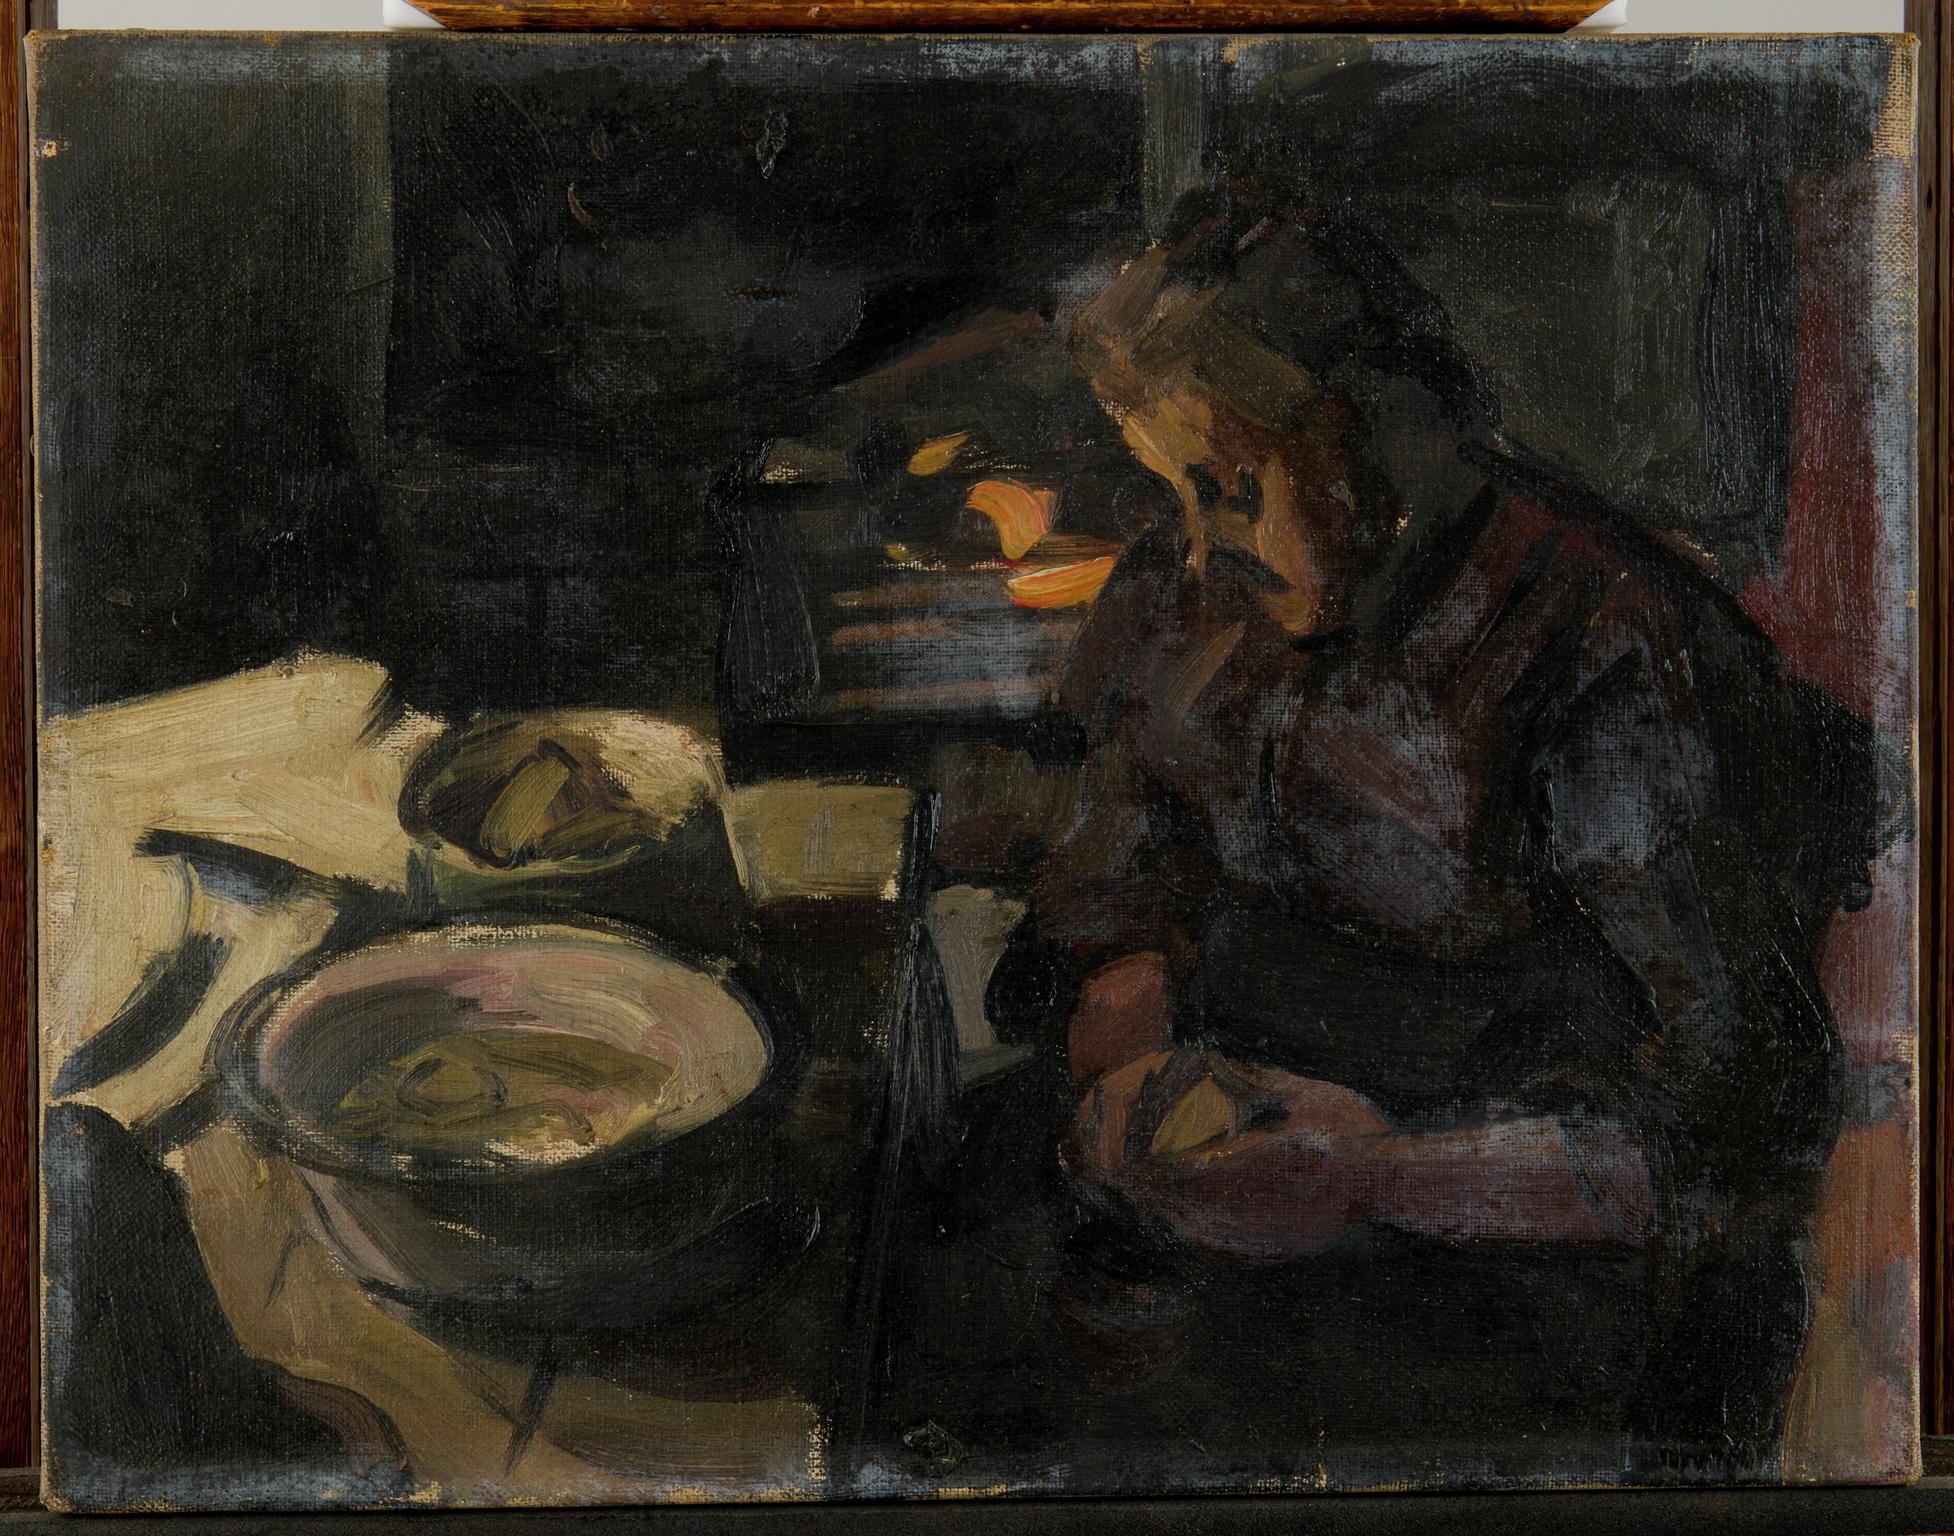 The artist's mother peeling potatoes